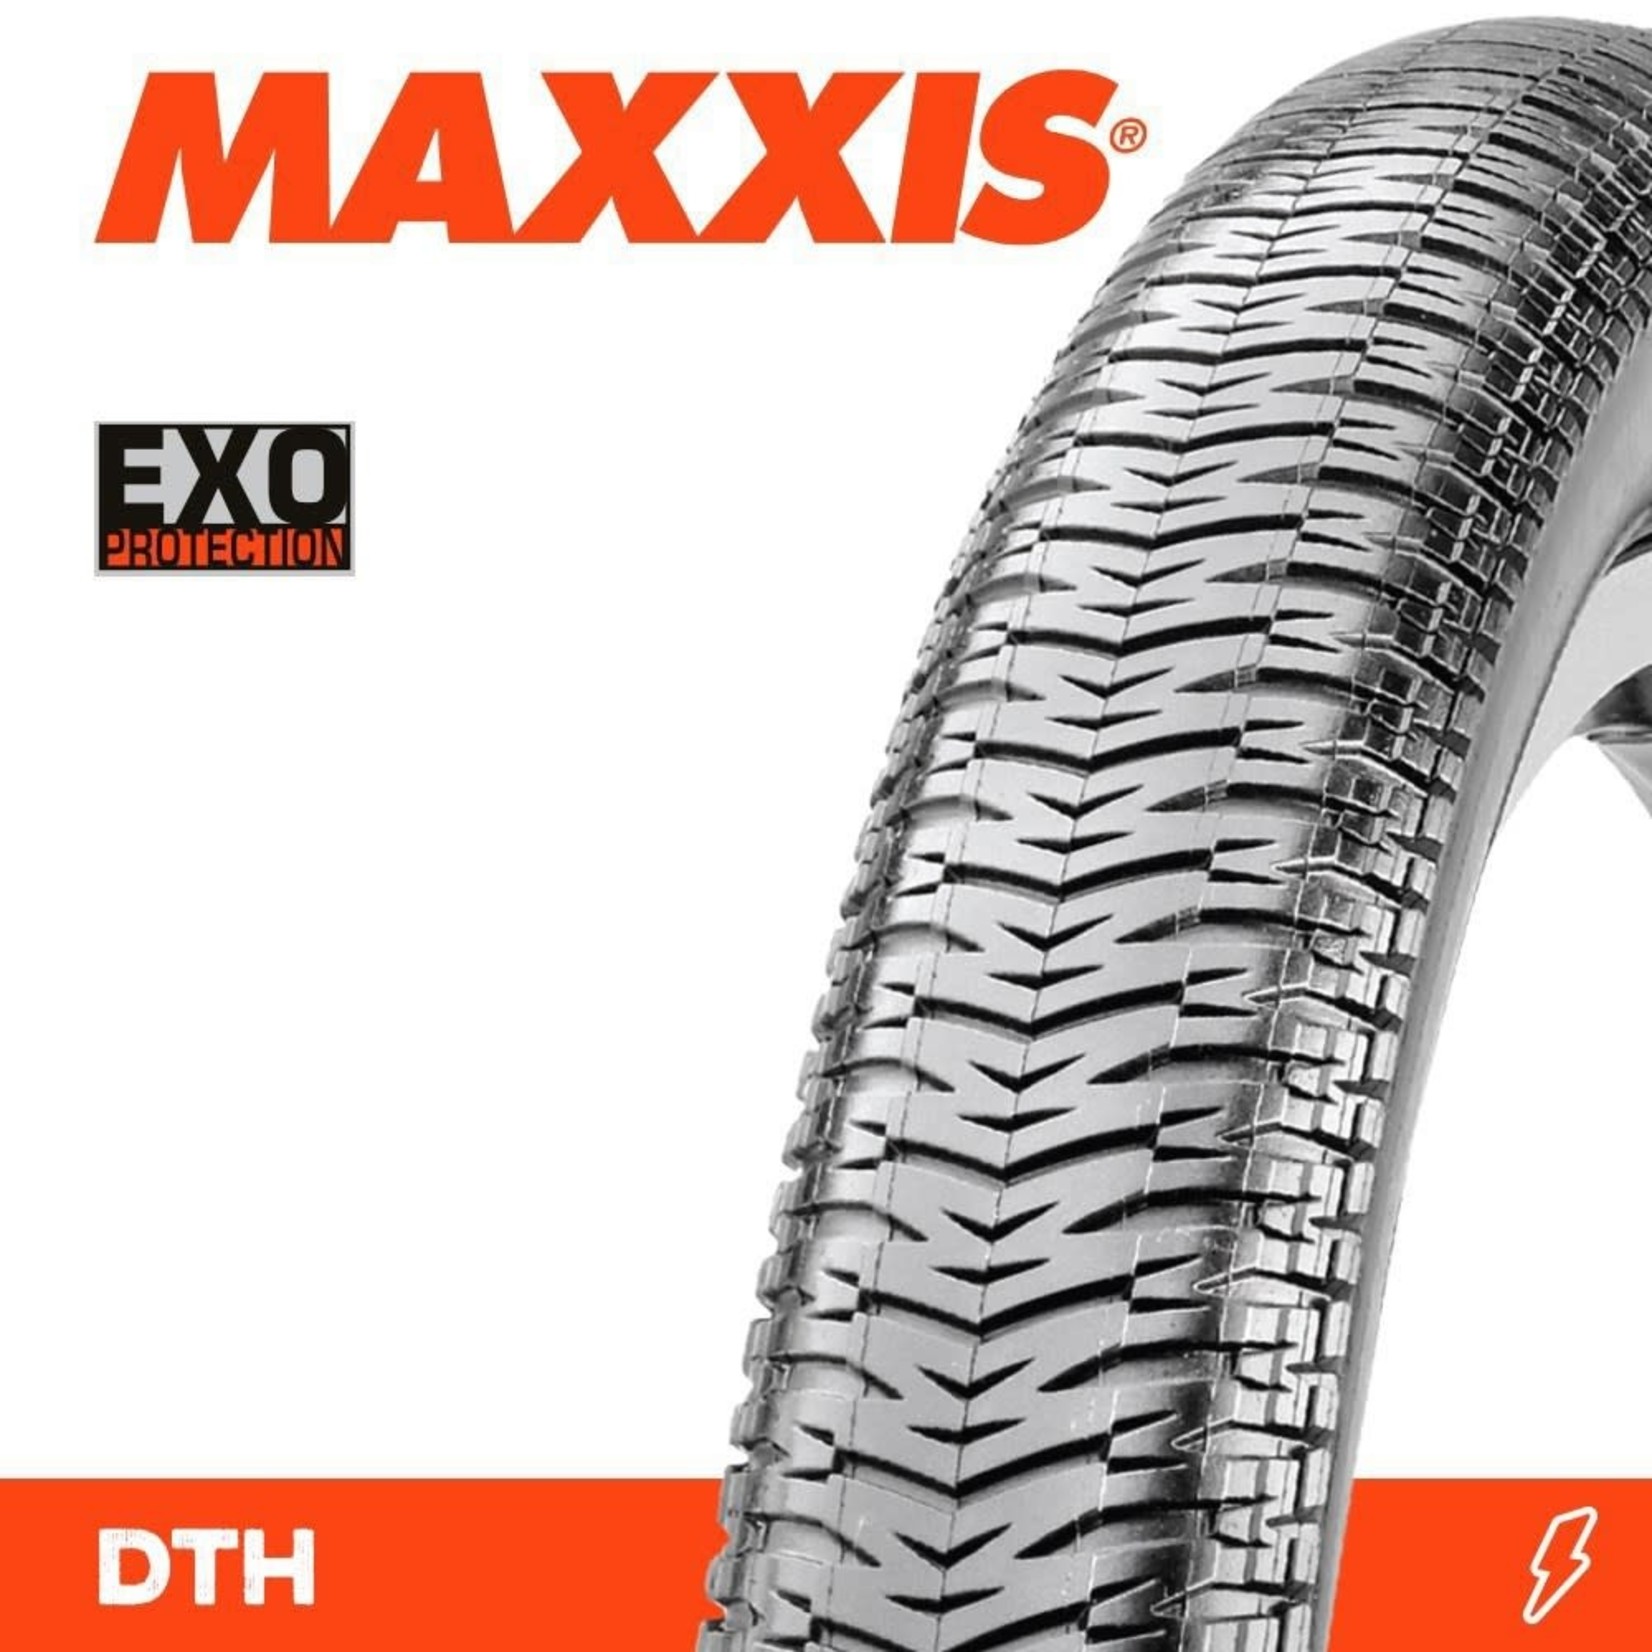 Maxxis Maxxis DTH Bike Tyre - 20 X 2.20 - EXO - Folding - 120TPI - Pair